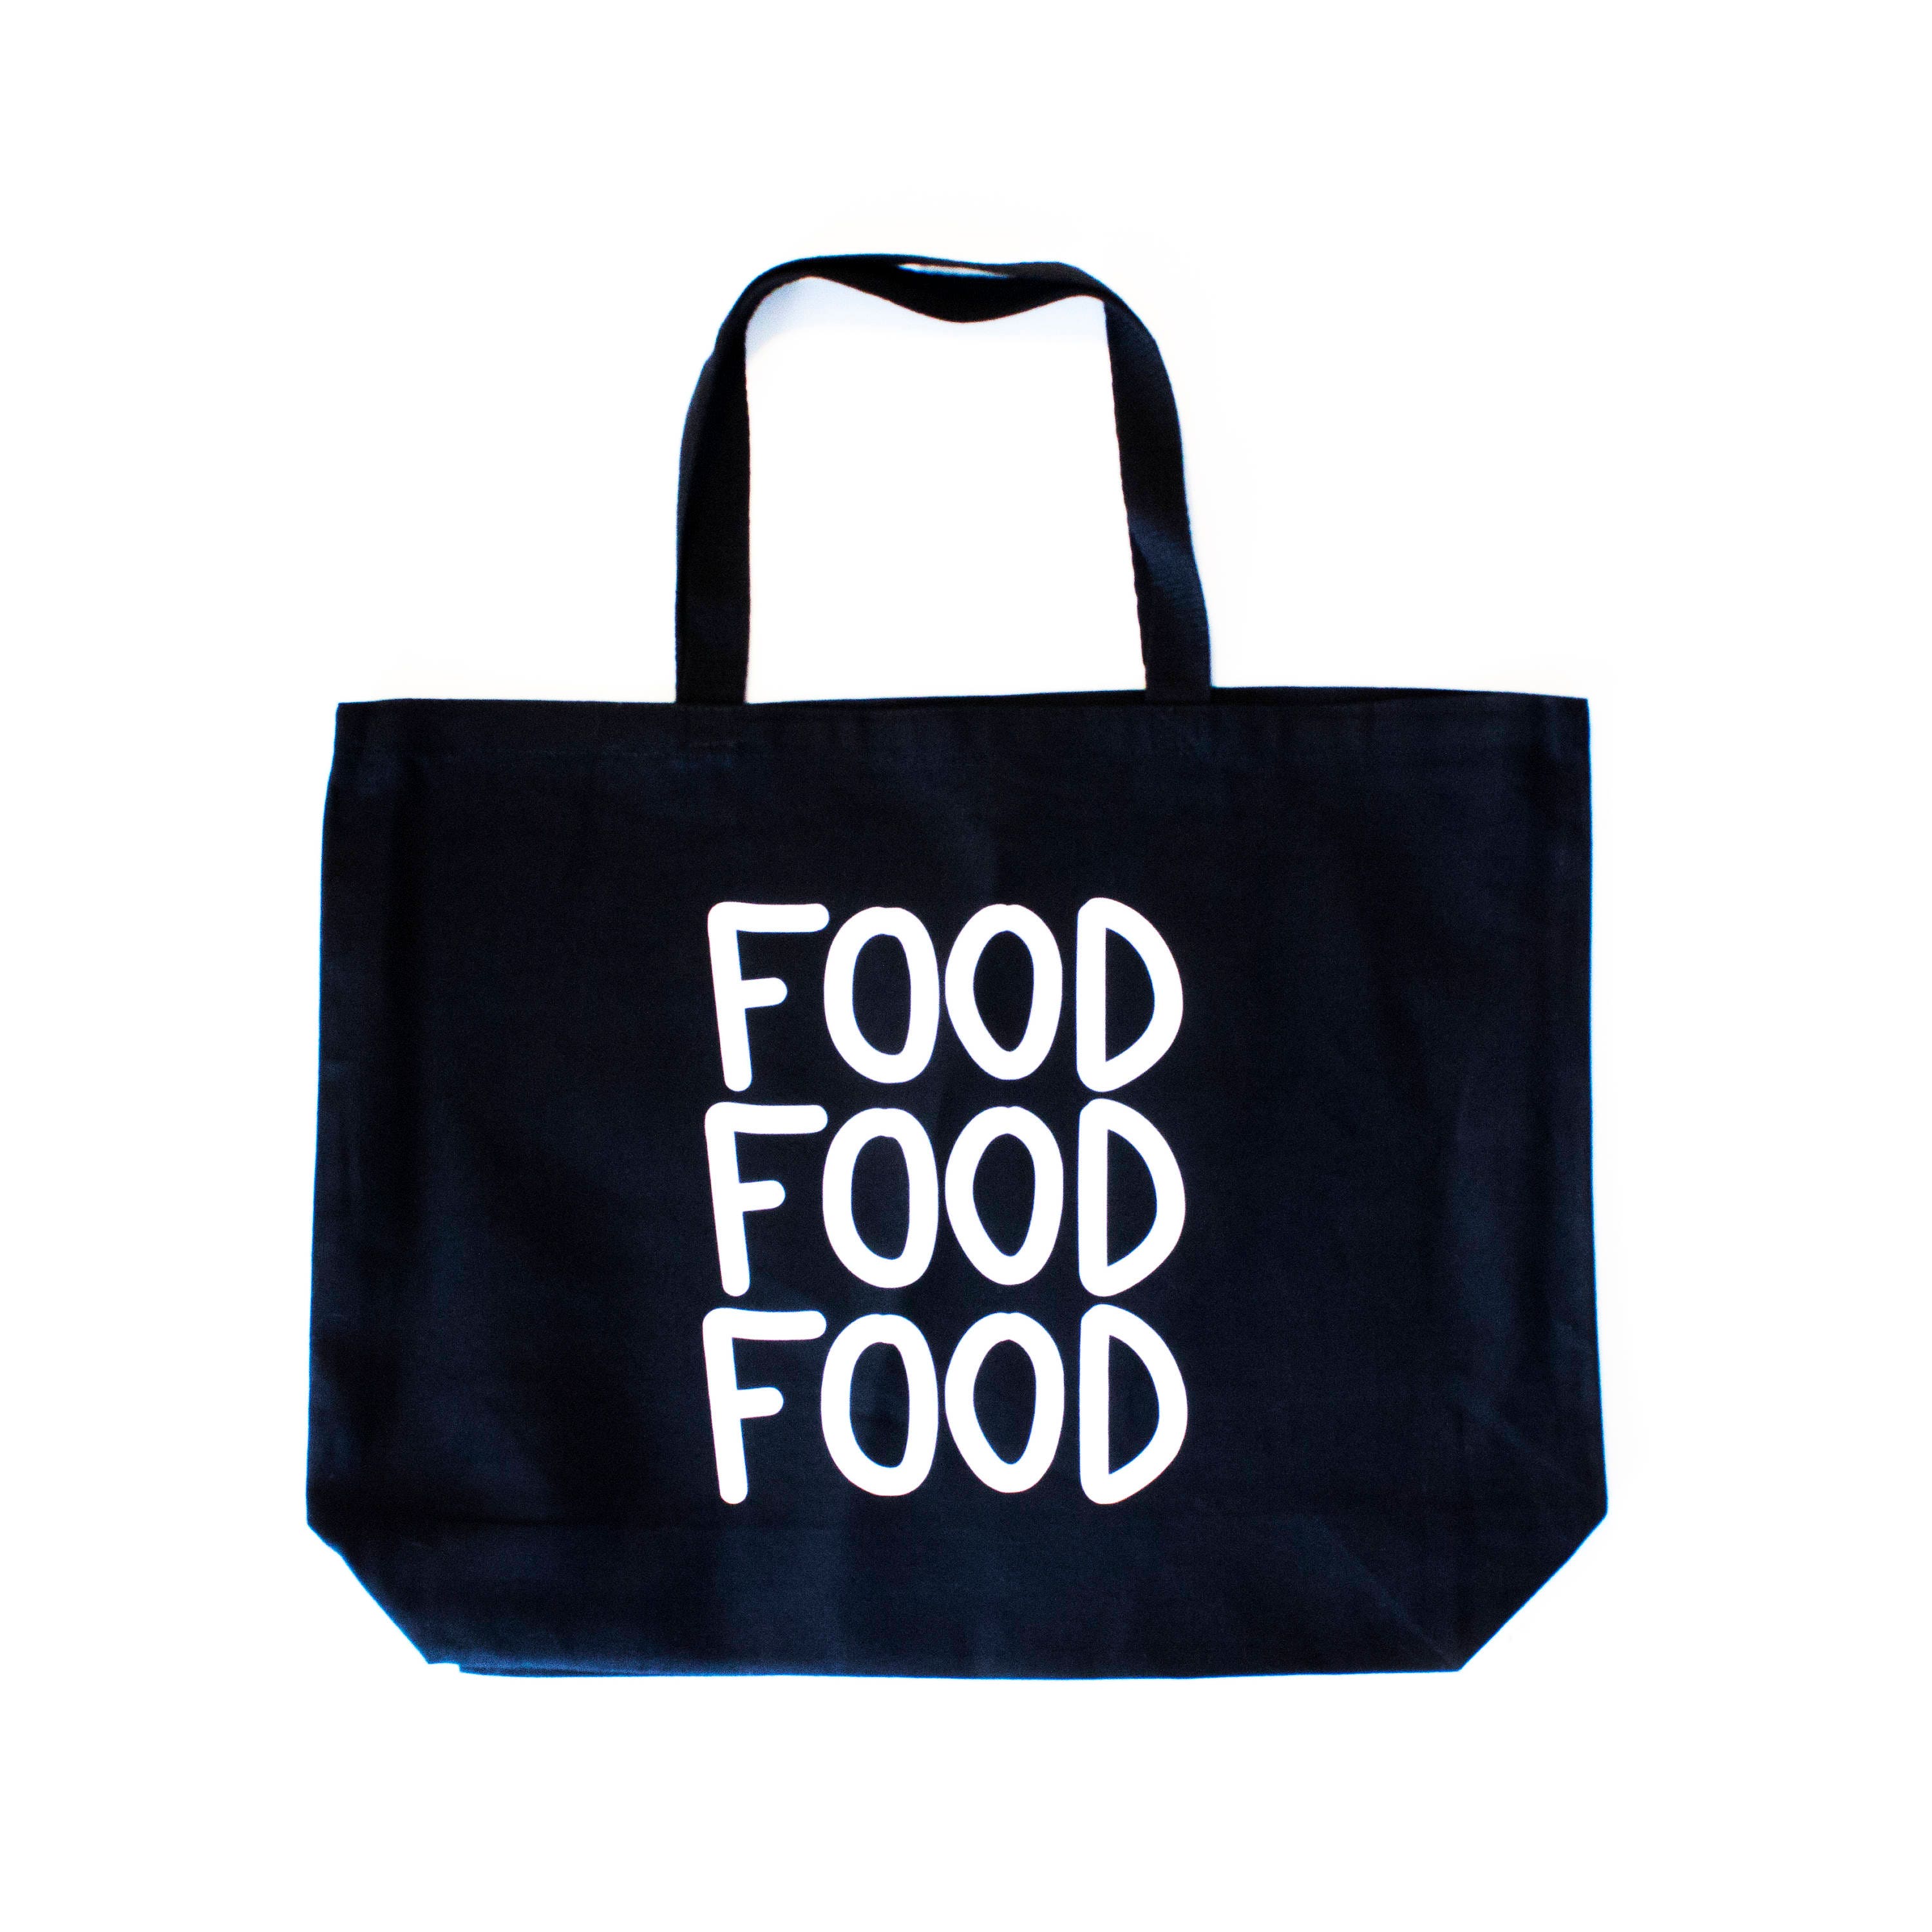 Food food food tote bag 100% heavy canvas design in Quebec | Etsy